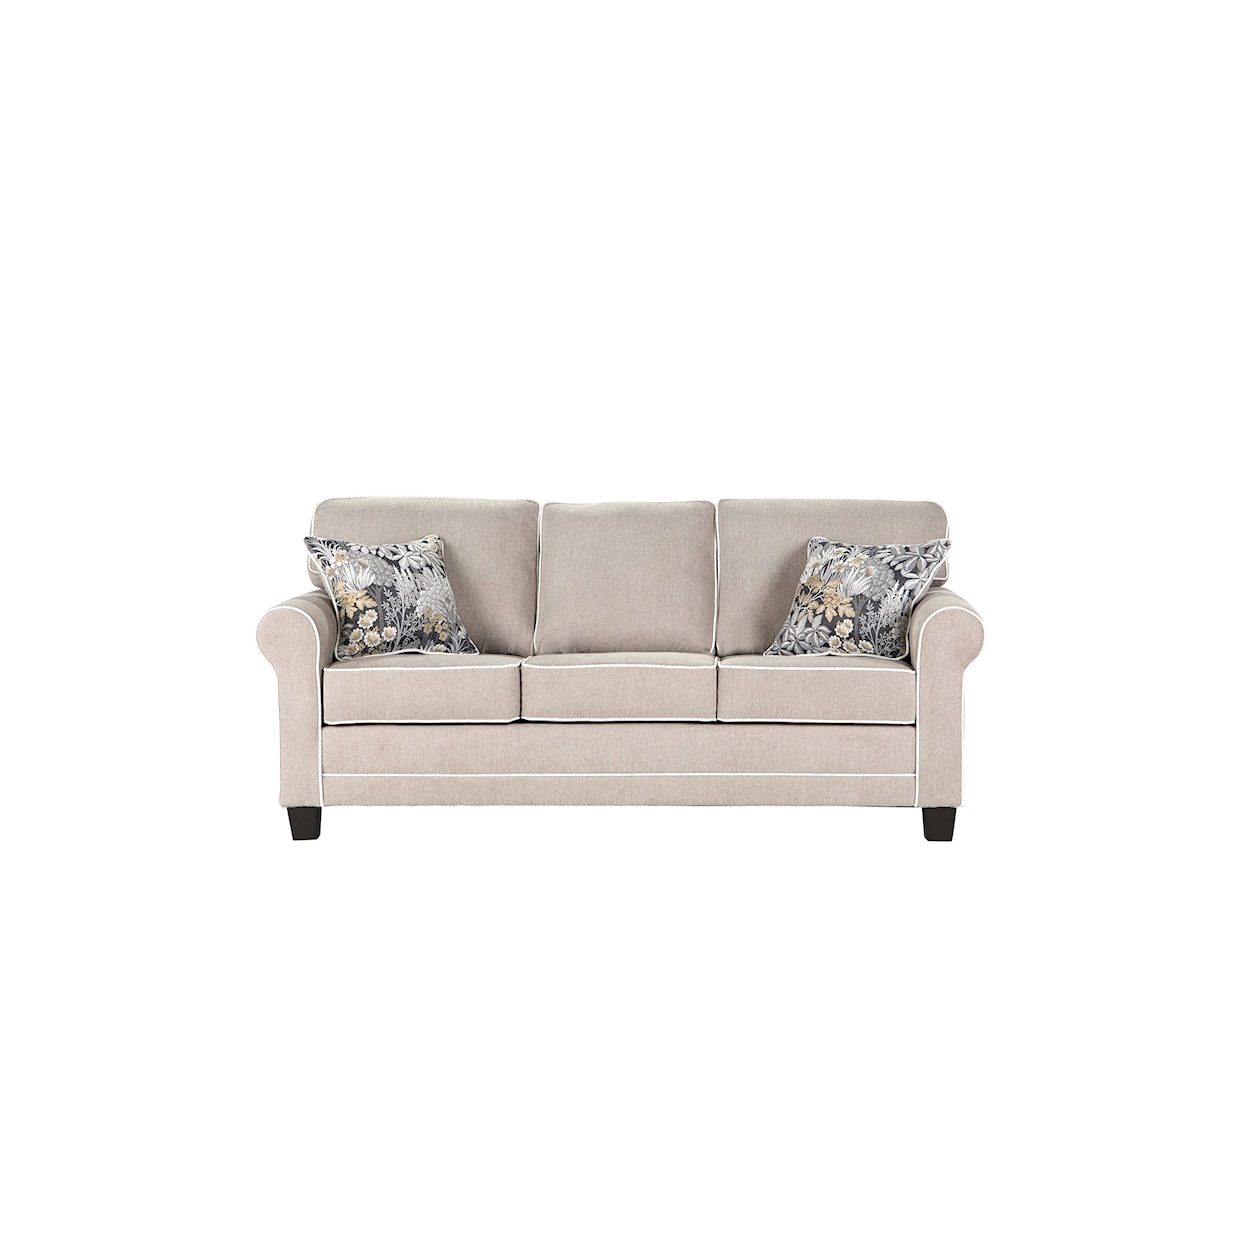 Hughes Furniture 3750 Sofa